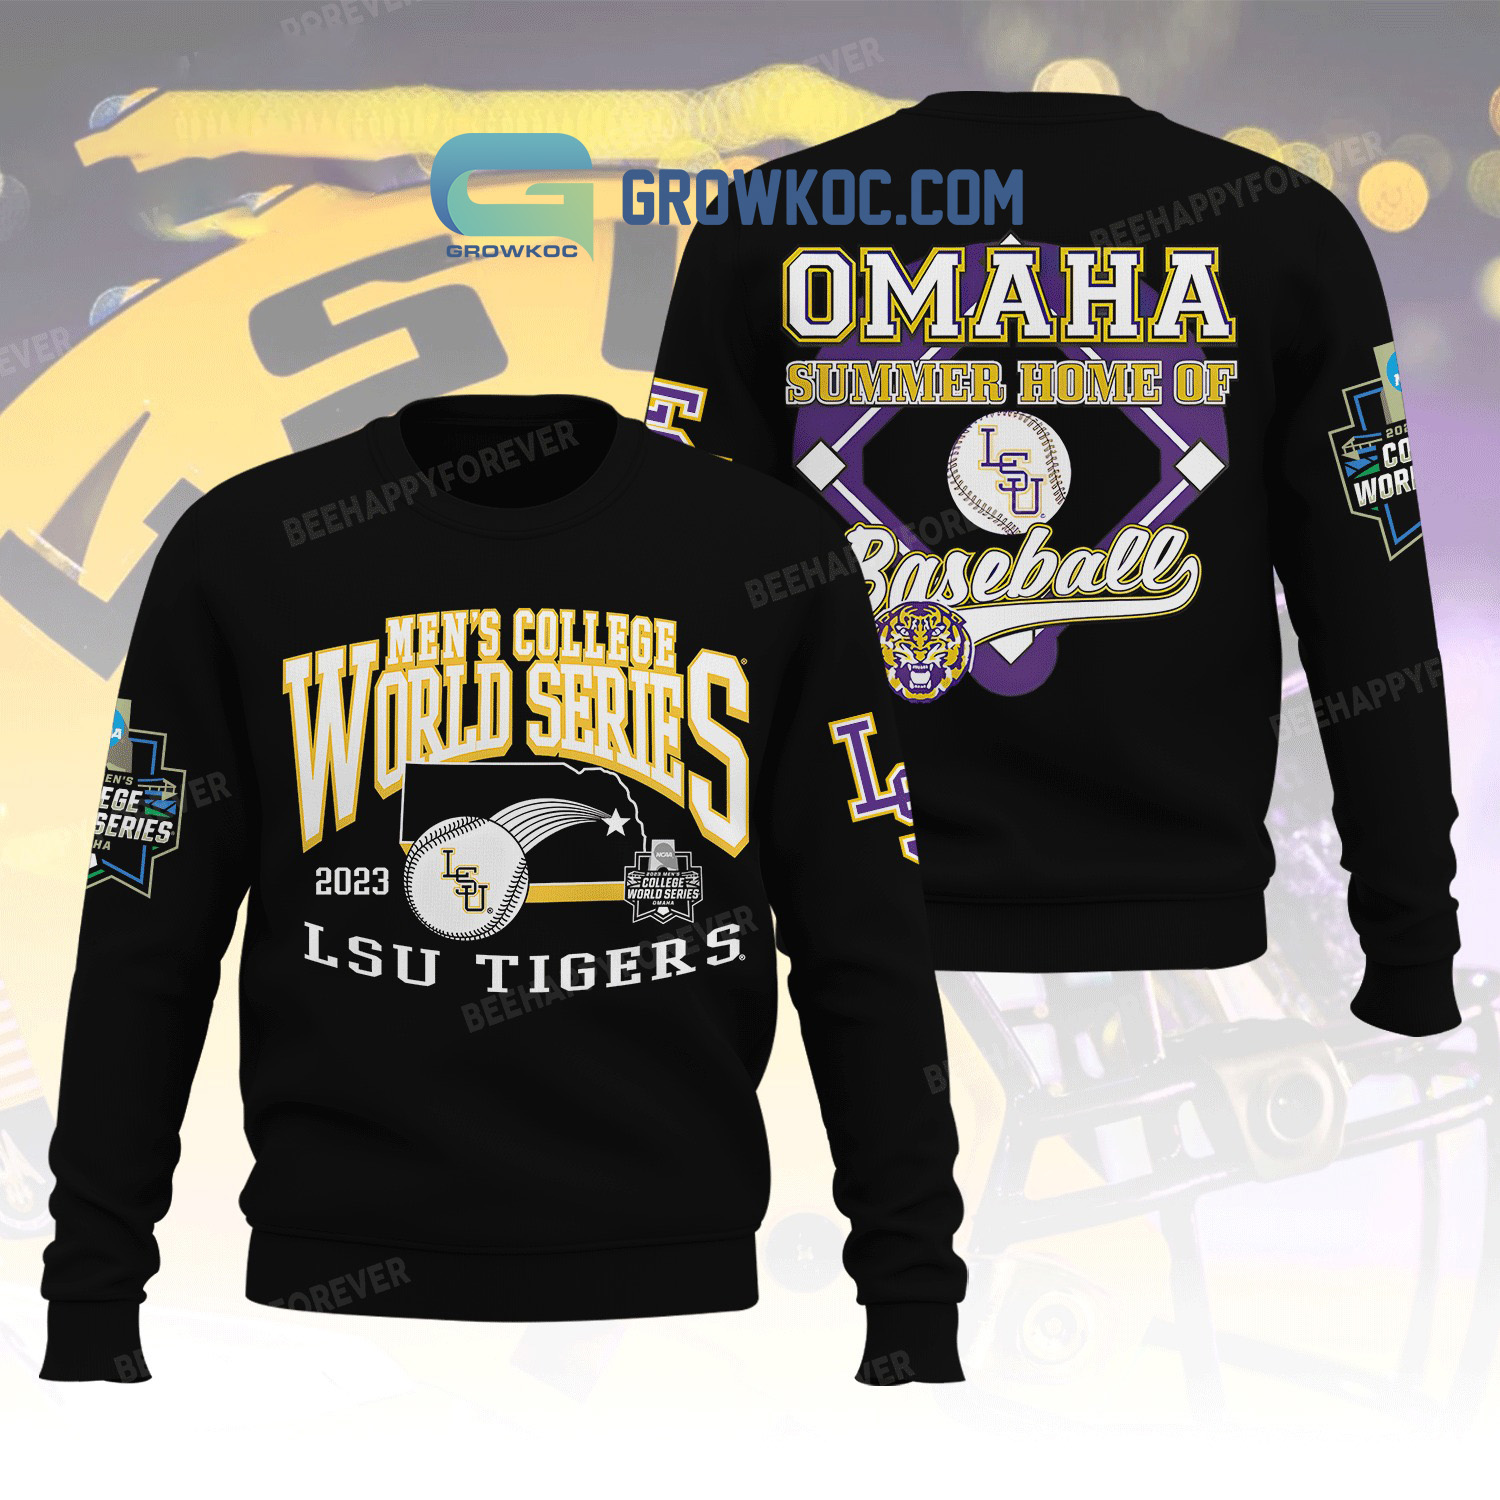 Men's College World Series Champions 2023 LSU Tigers Hoodie T Shirt -  Growkoc